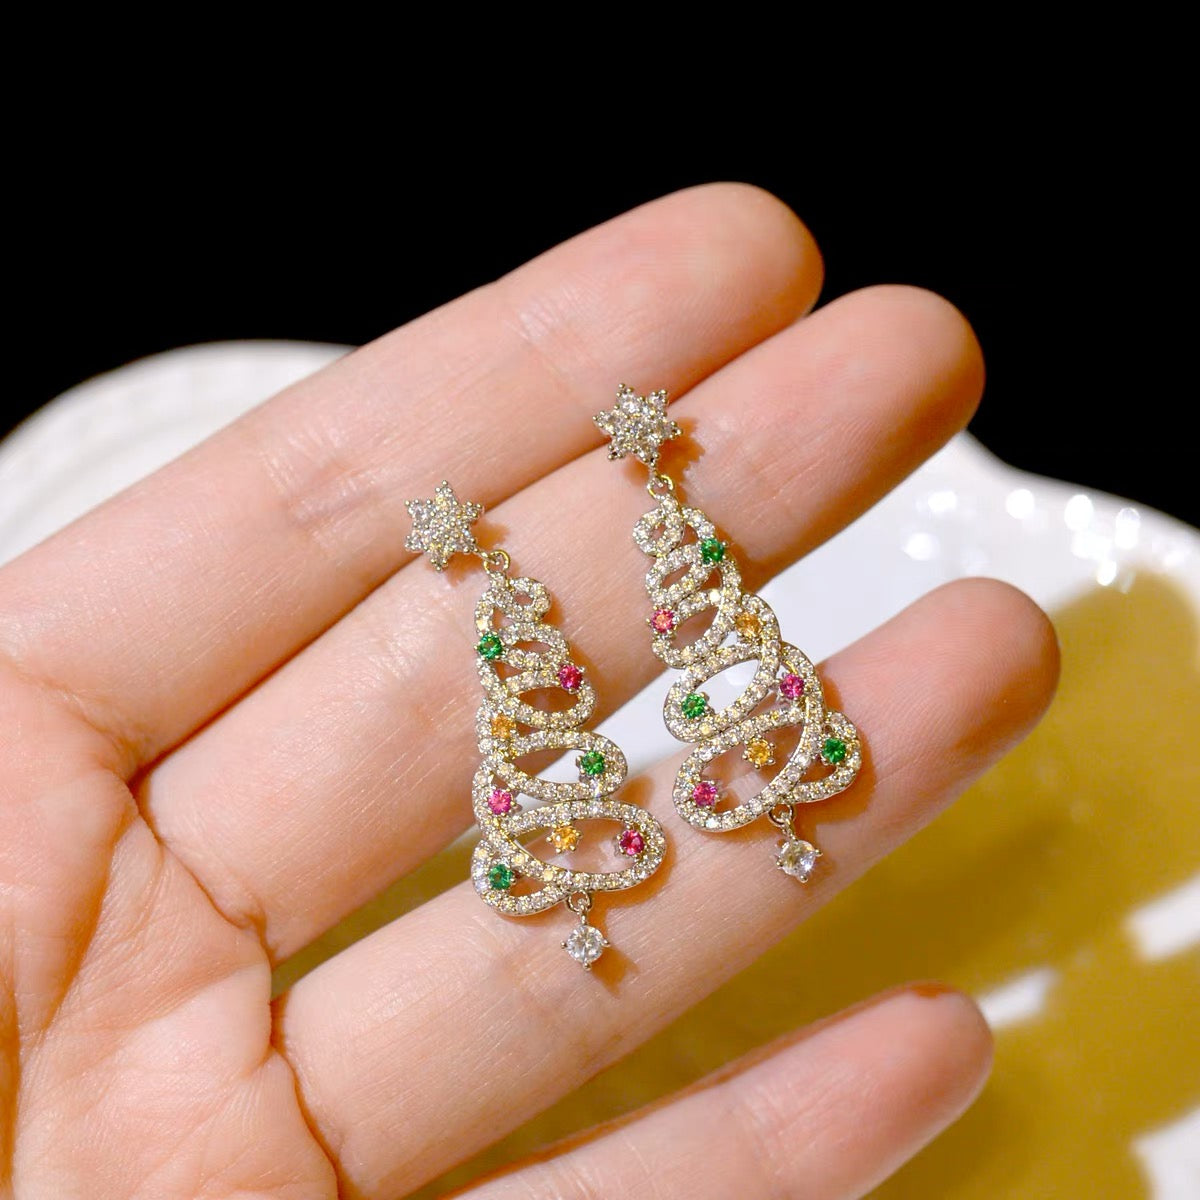 (🌲Early Christmas Sale- 50% OFF) Diamond Christmas Tree Earrings